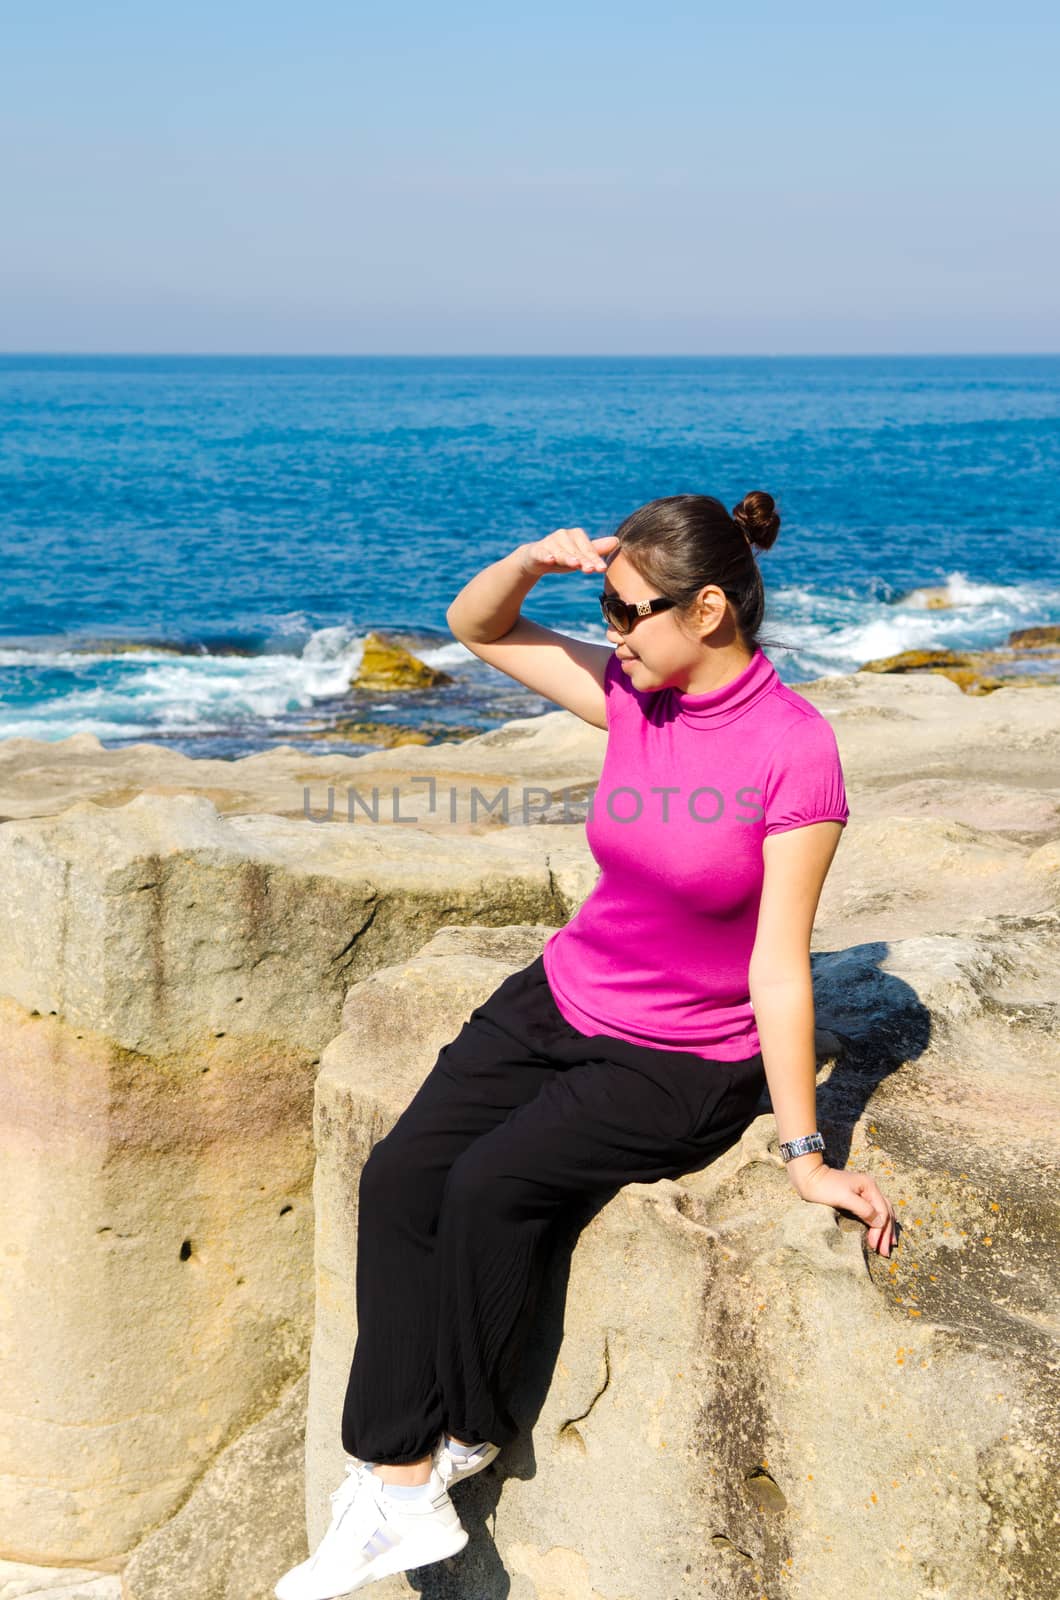 Asian girl explores the coastline of Bondi Beach in Sydney,Australia.